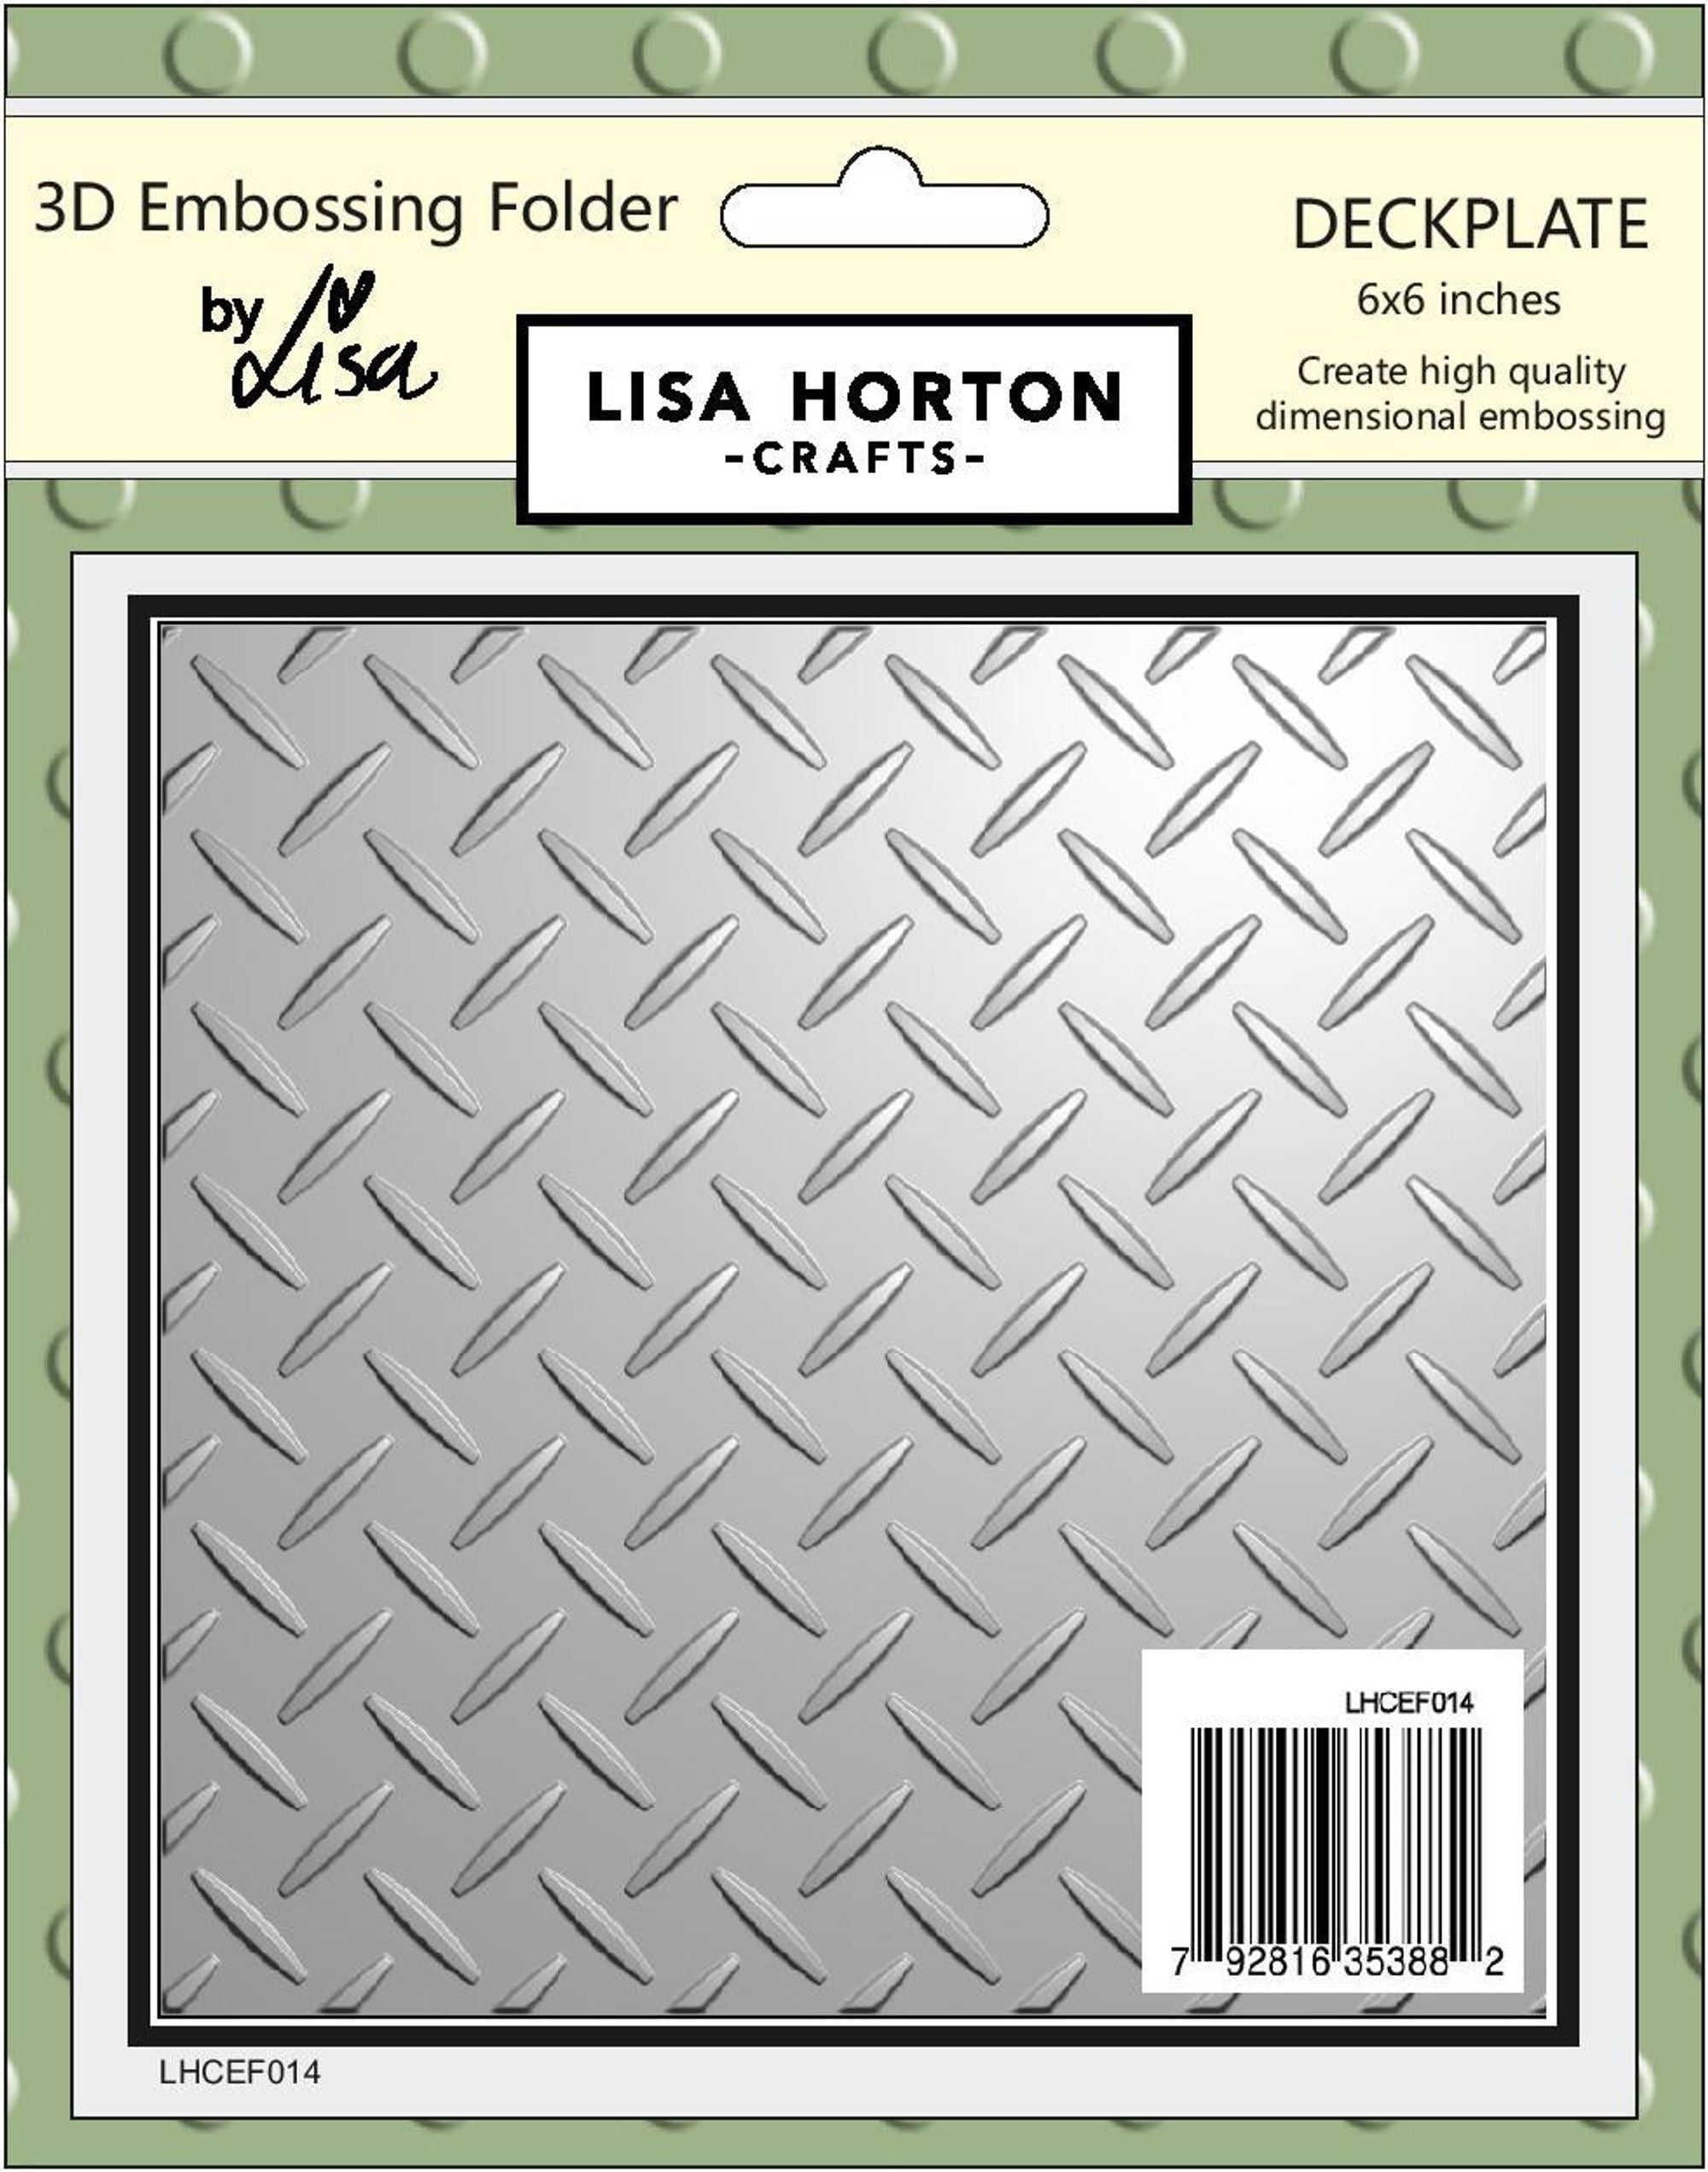 Textured Linen Cardstock - Classic Black 36 12x12 Sheets